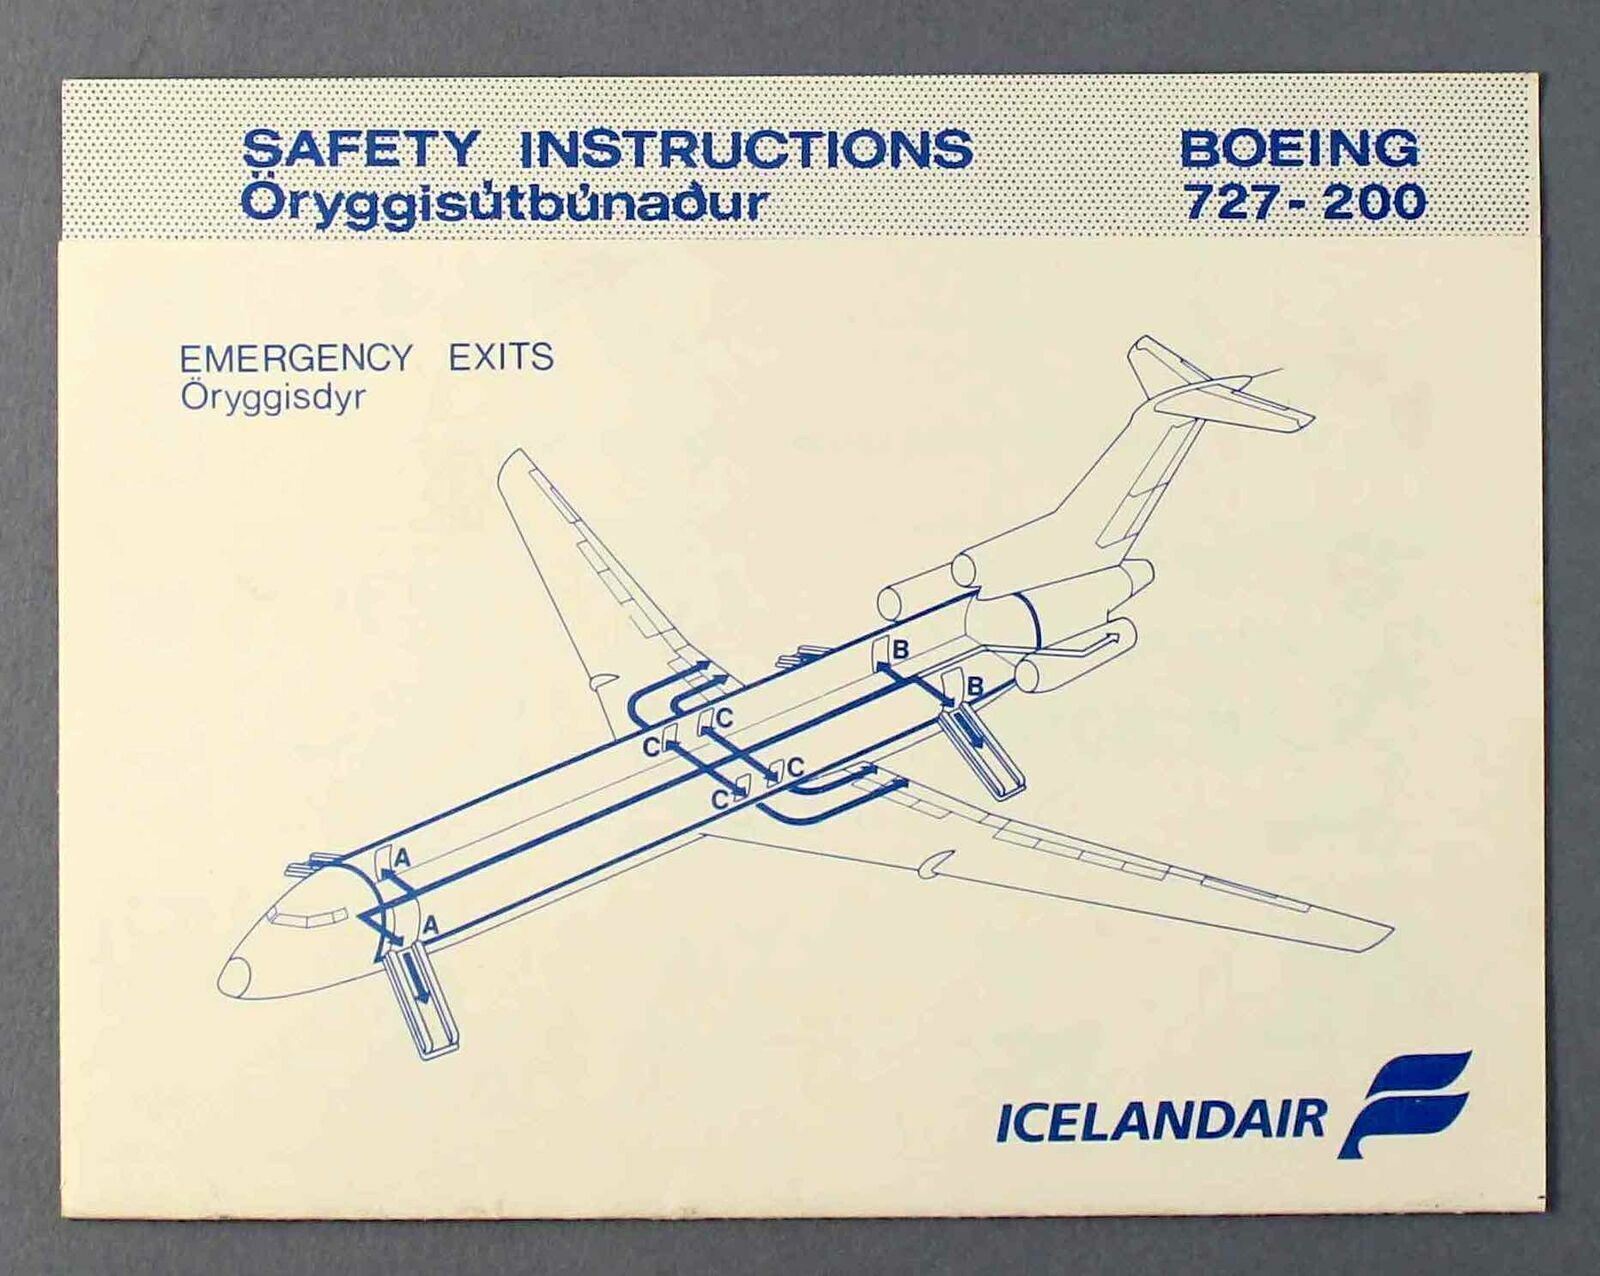 ICELANDAIR BOEING 727-200 VINTAGE AIRLINE SAFETY CARD ICELAND FI